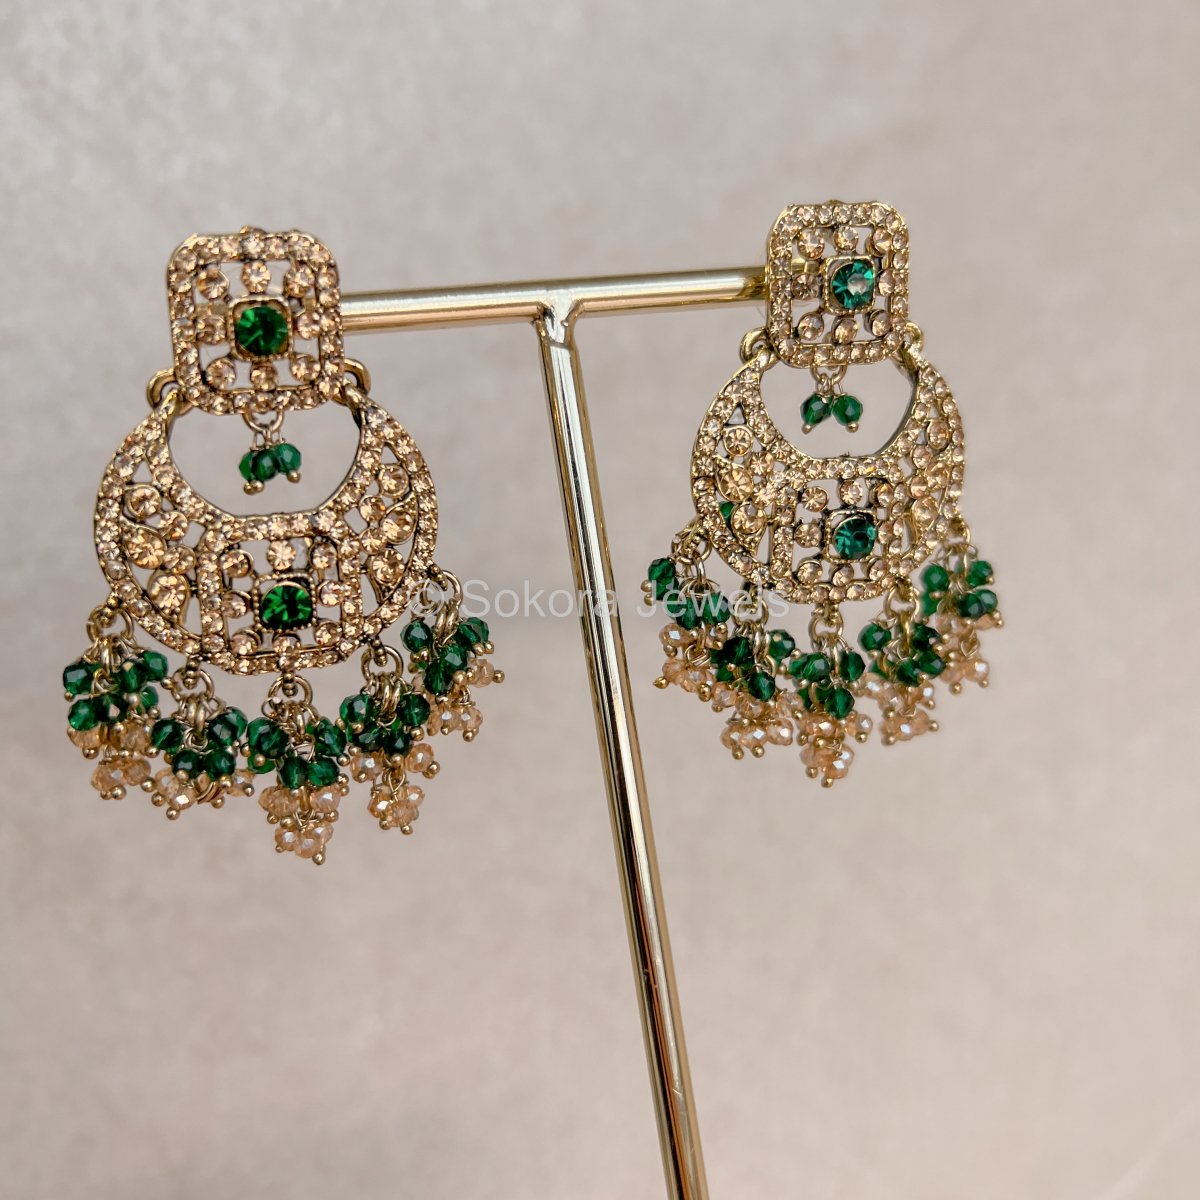 Qudsia Small Earrings - Green - SOKORA JEWELSQudsia Small Earrings - Green